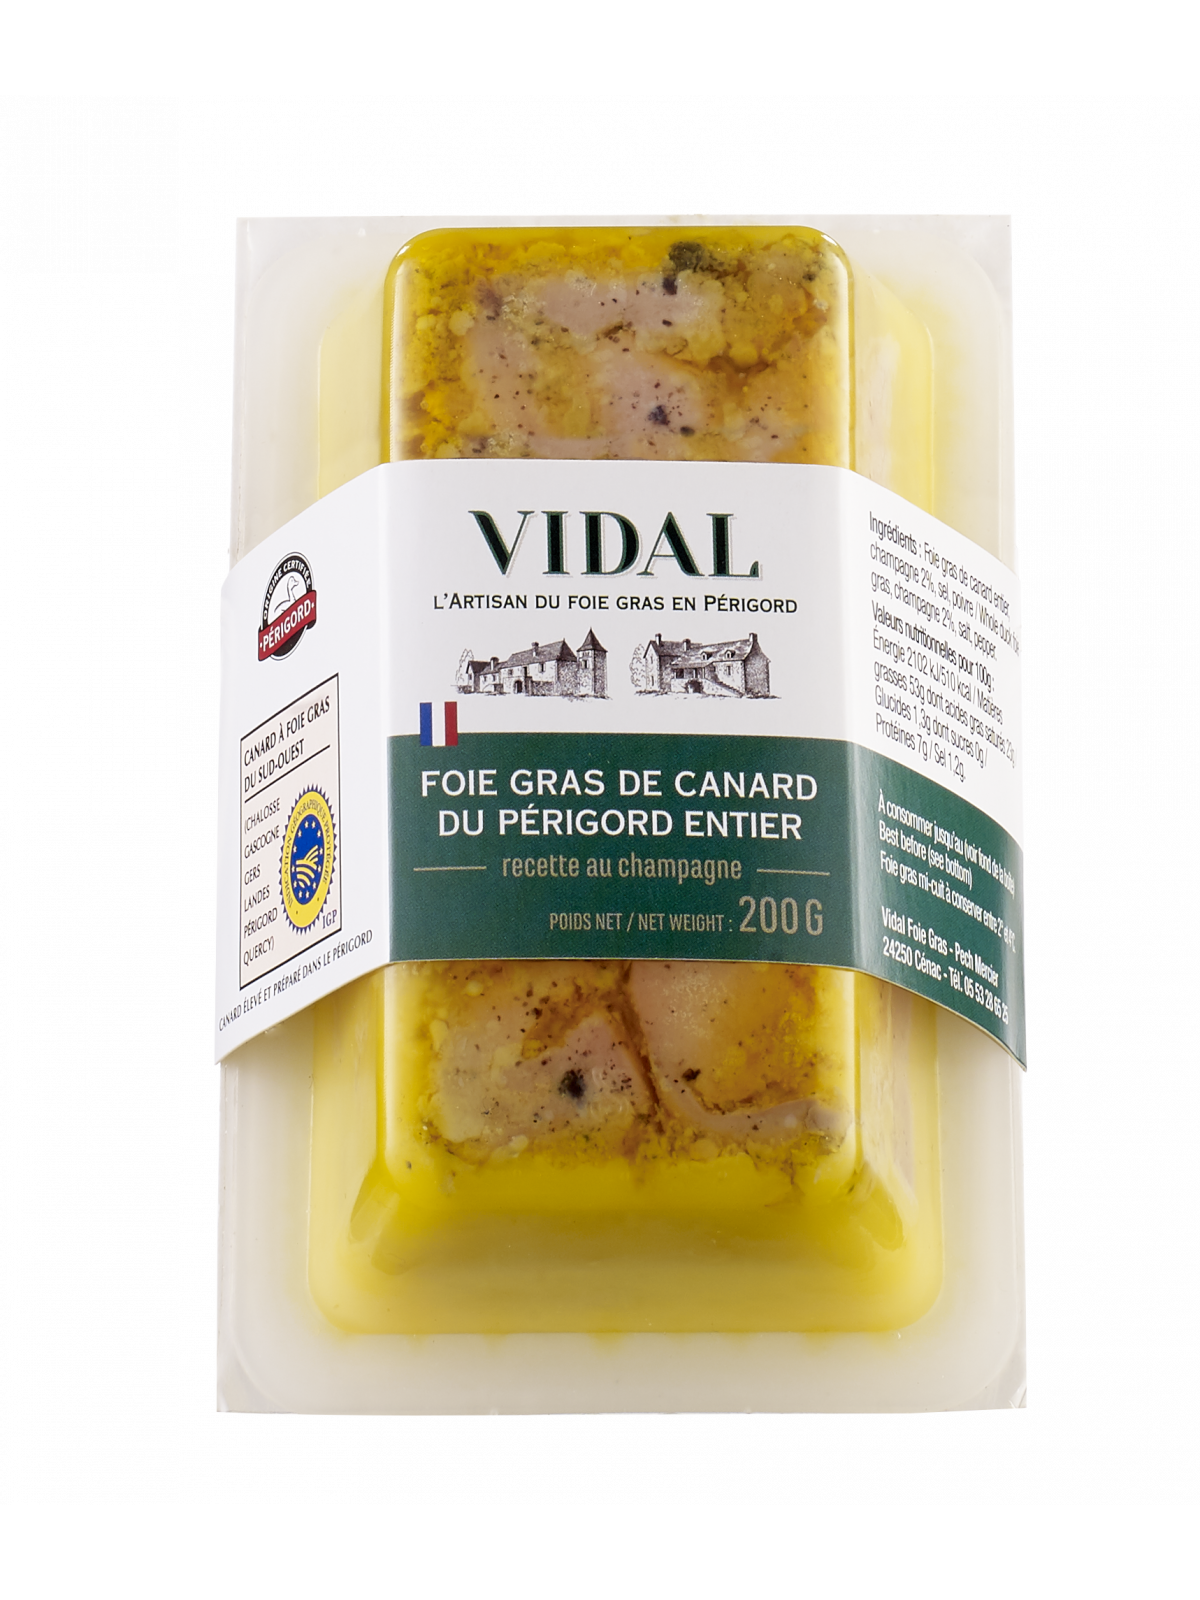 Foie Gras de Canard Entier mi-cuit - Cellier du Périgord